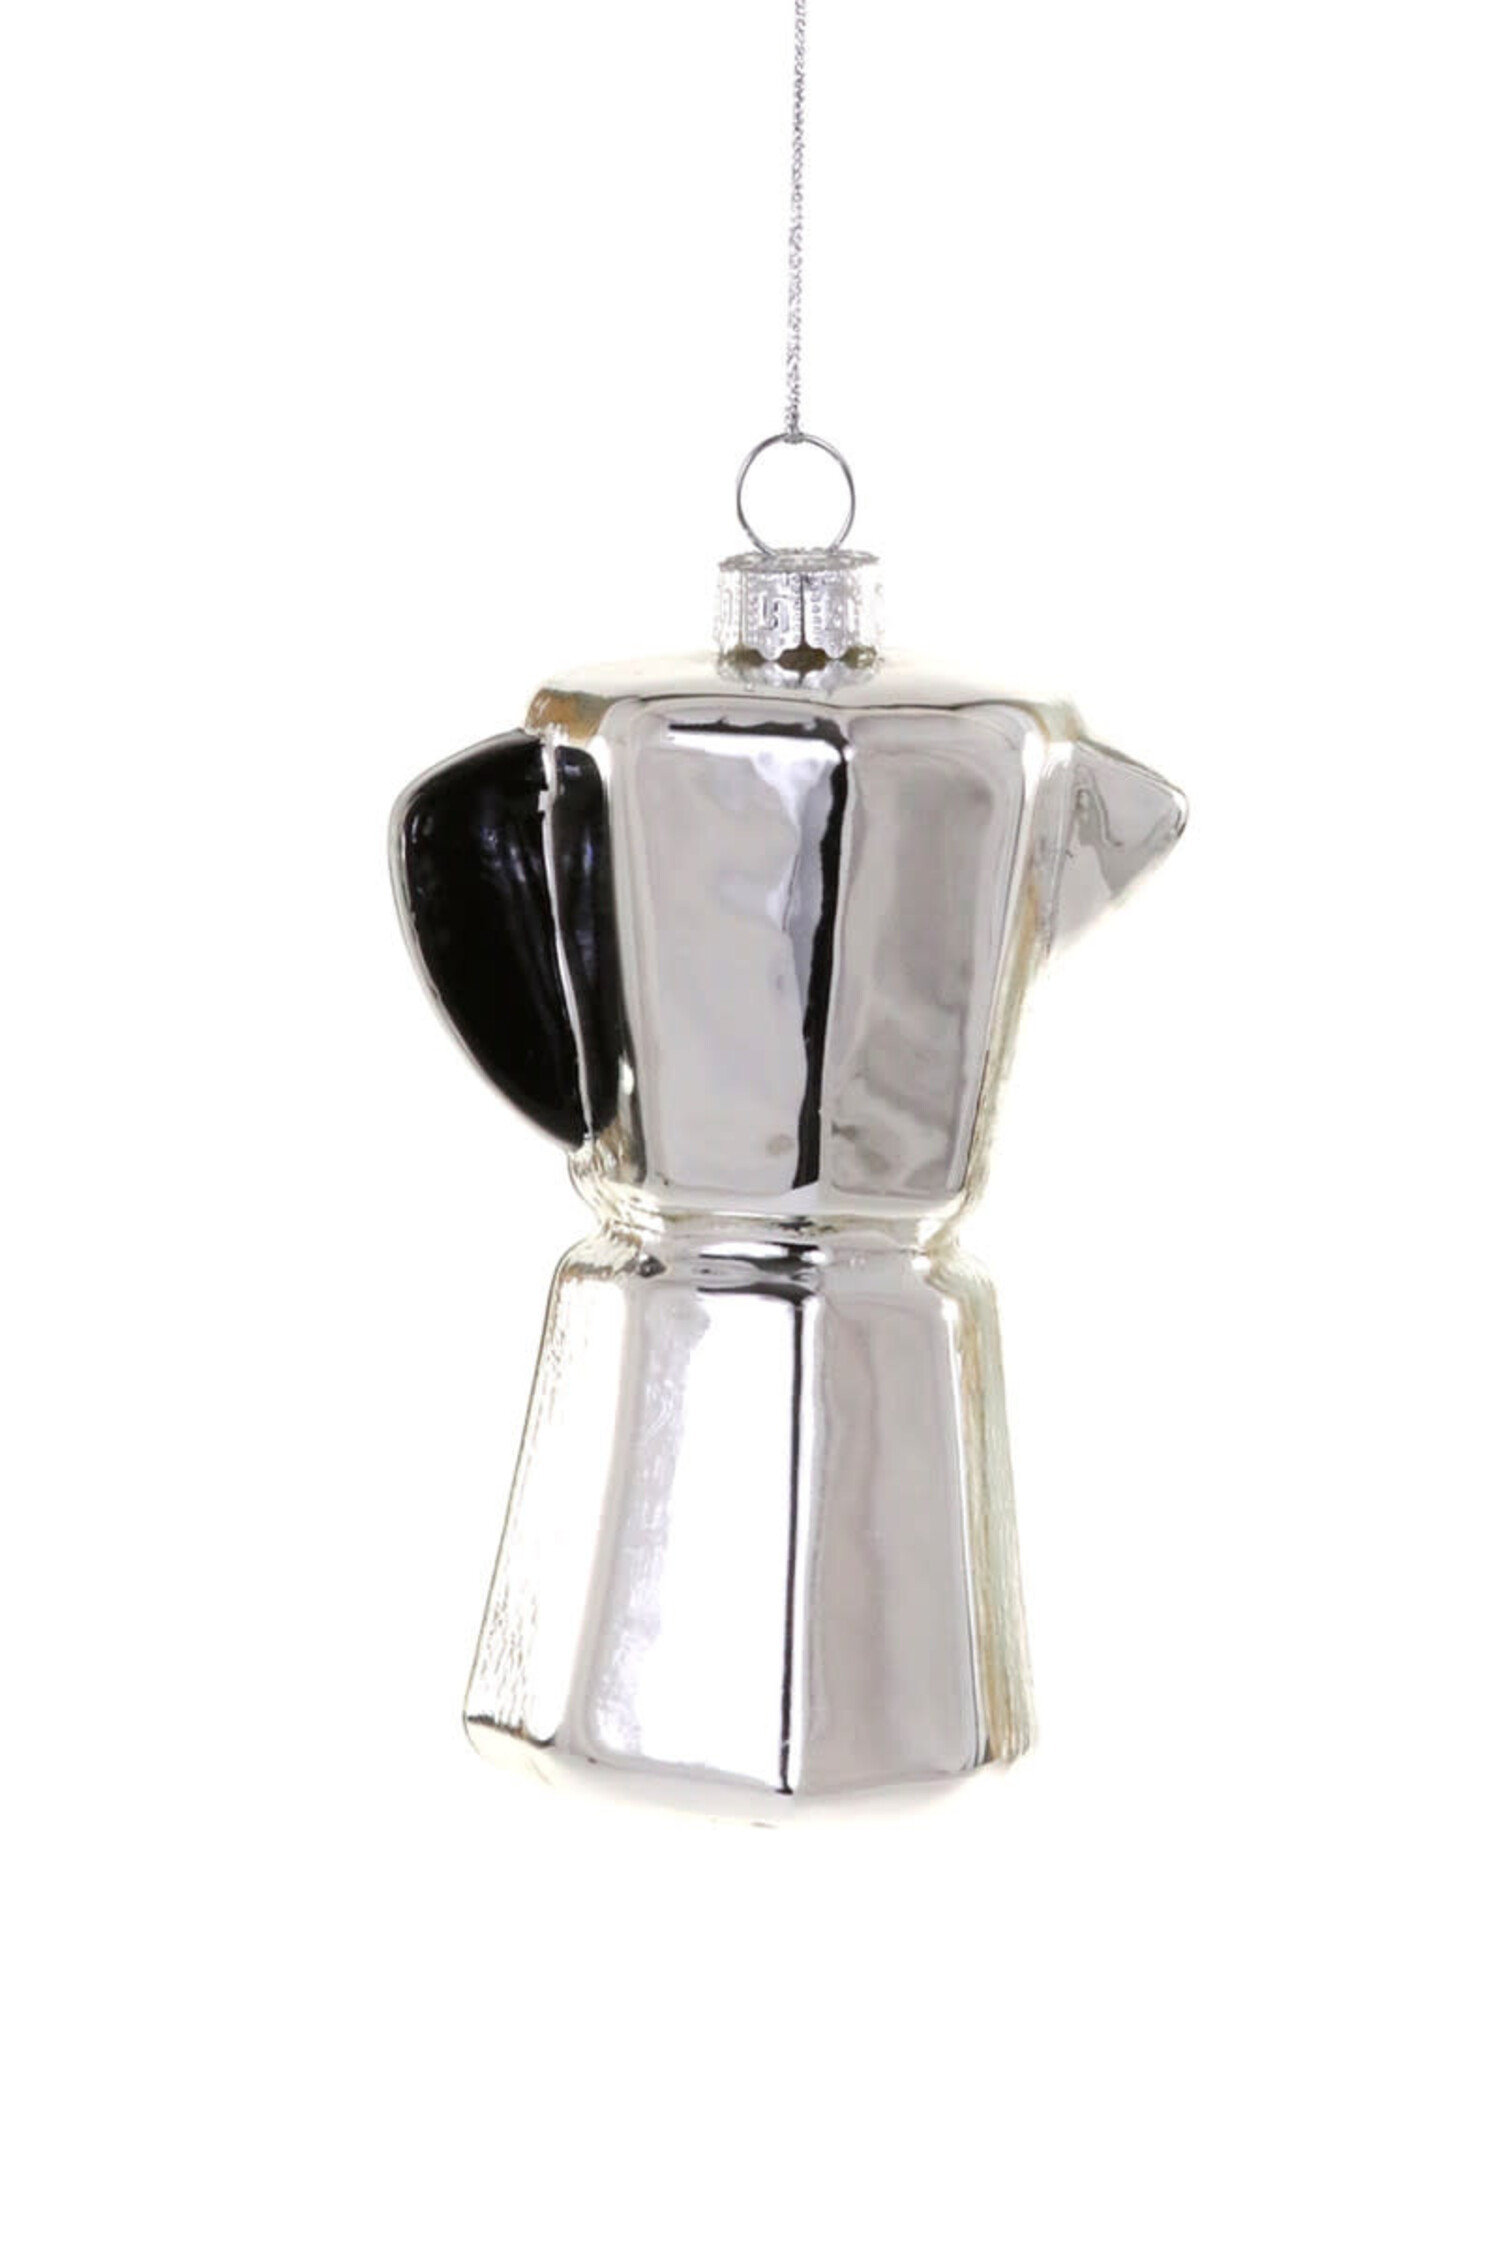 https://cdn.shoplightspeed.com/shops/641068/files/57345896/1500x4000x3/cody-foster-co-moka-espresso-maker-glass-ornament.jpg